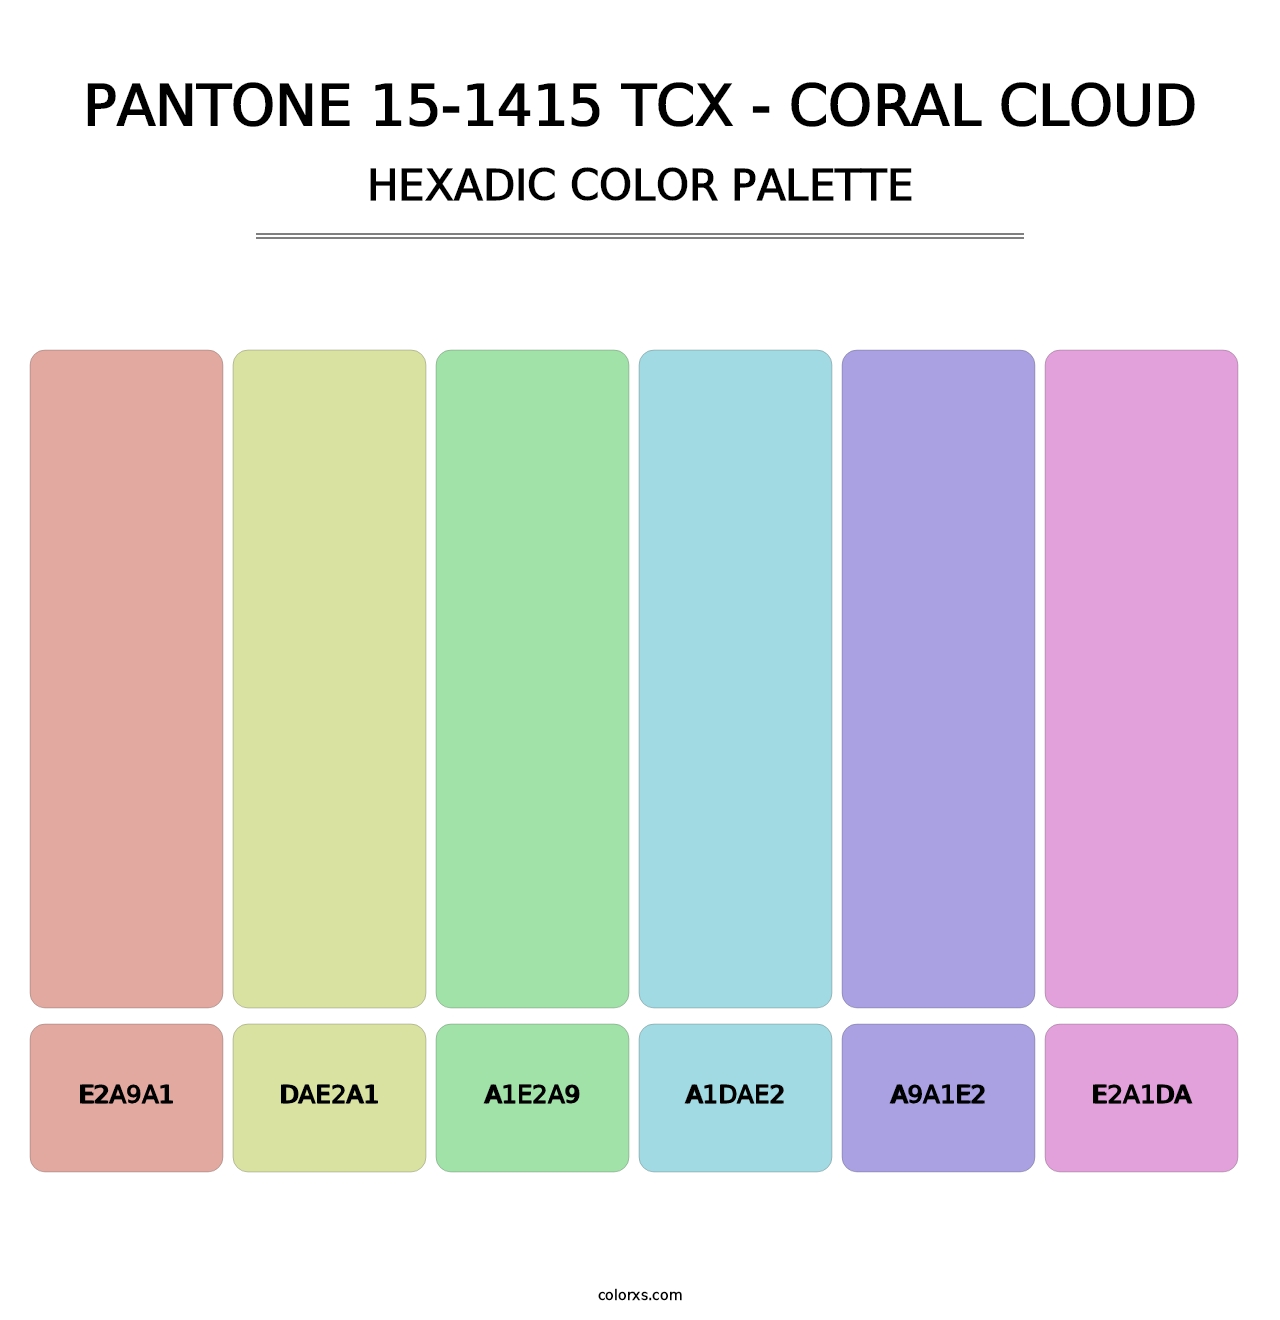 PANTONE 15-1415 TCX - Coral Cloud - Hexadic Color Palette